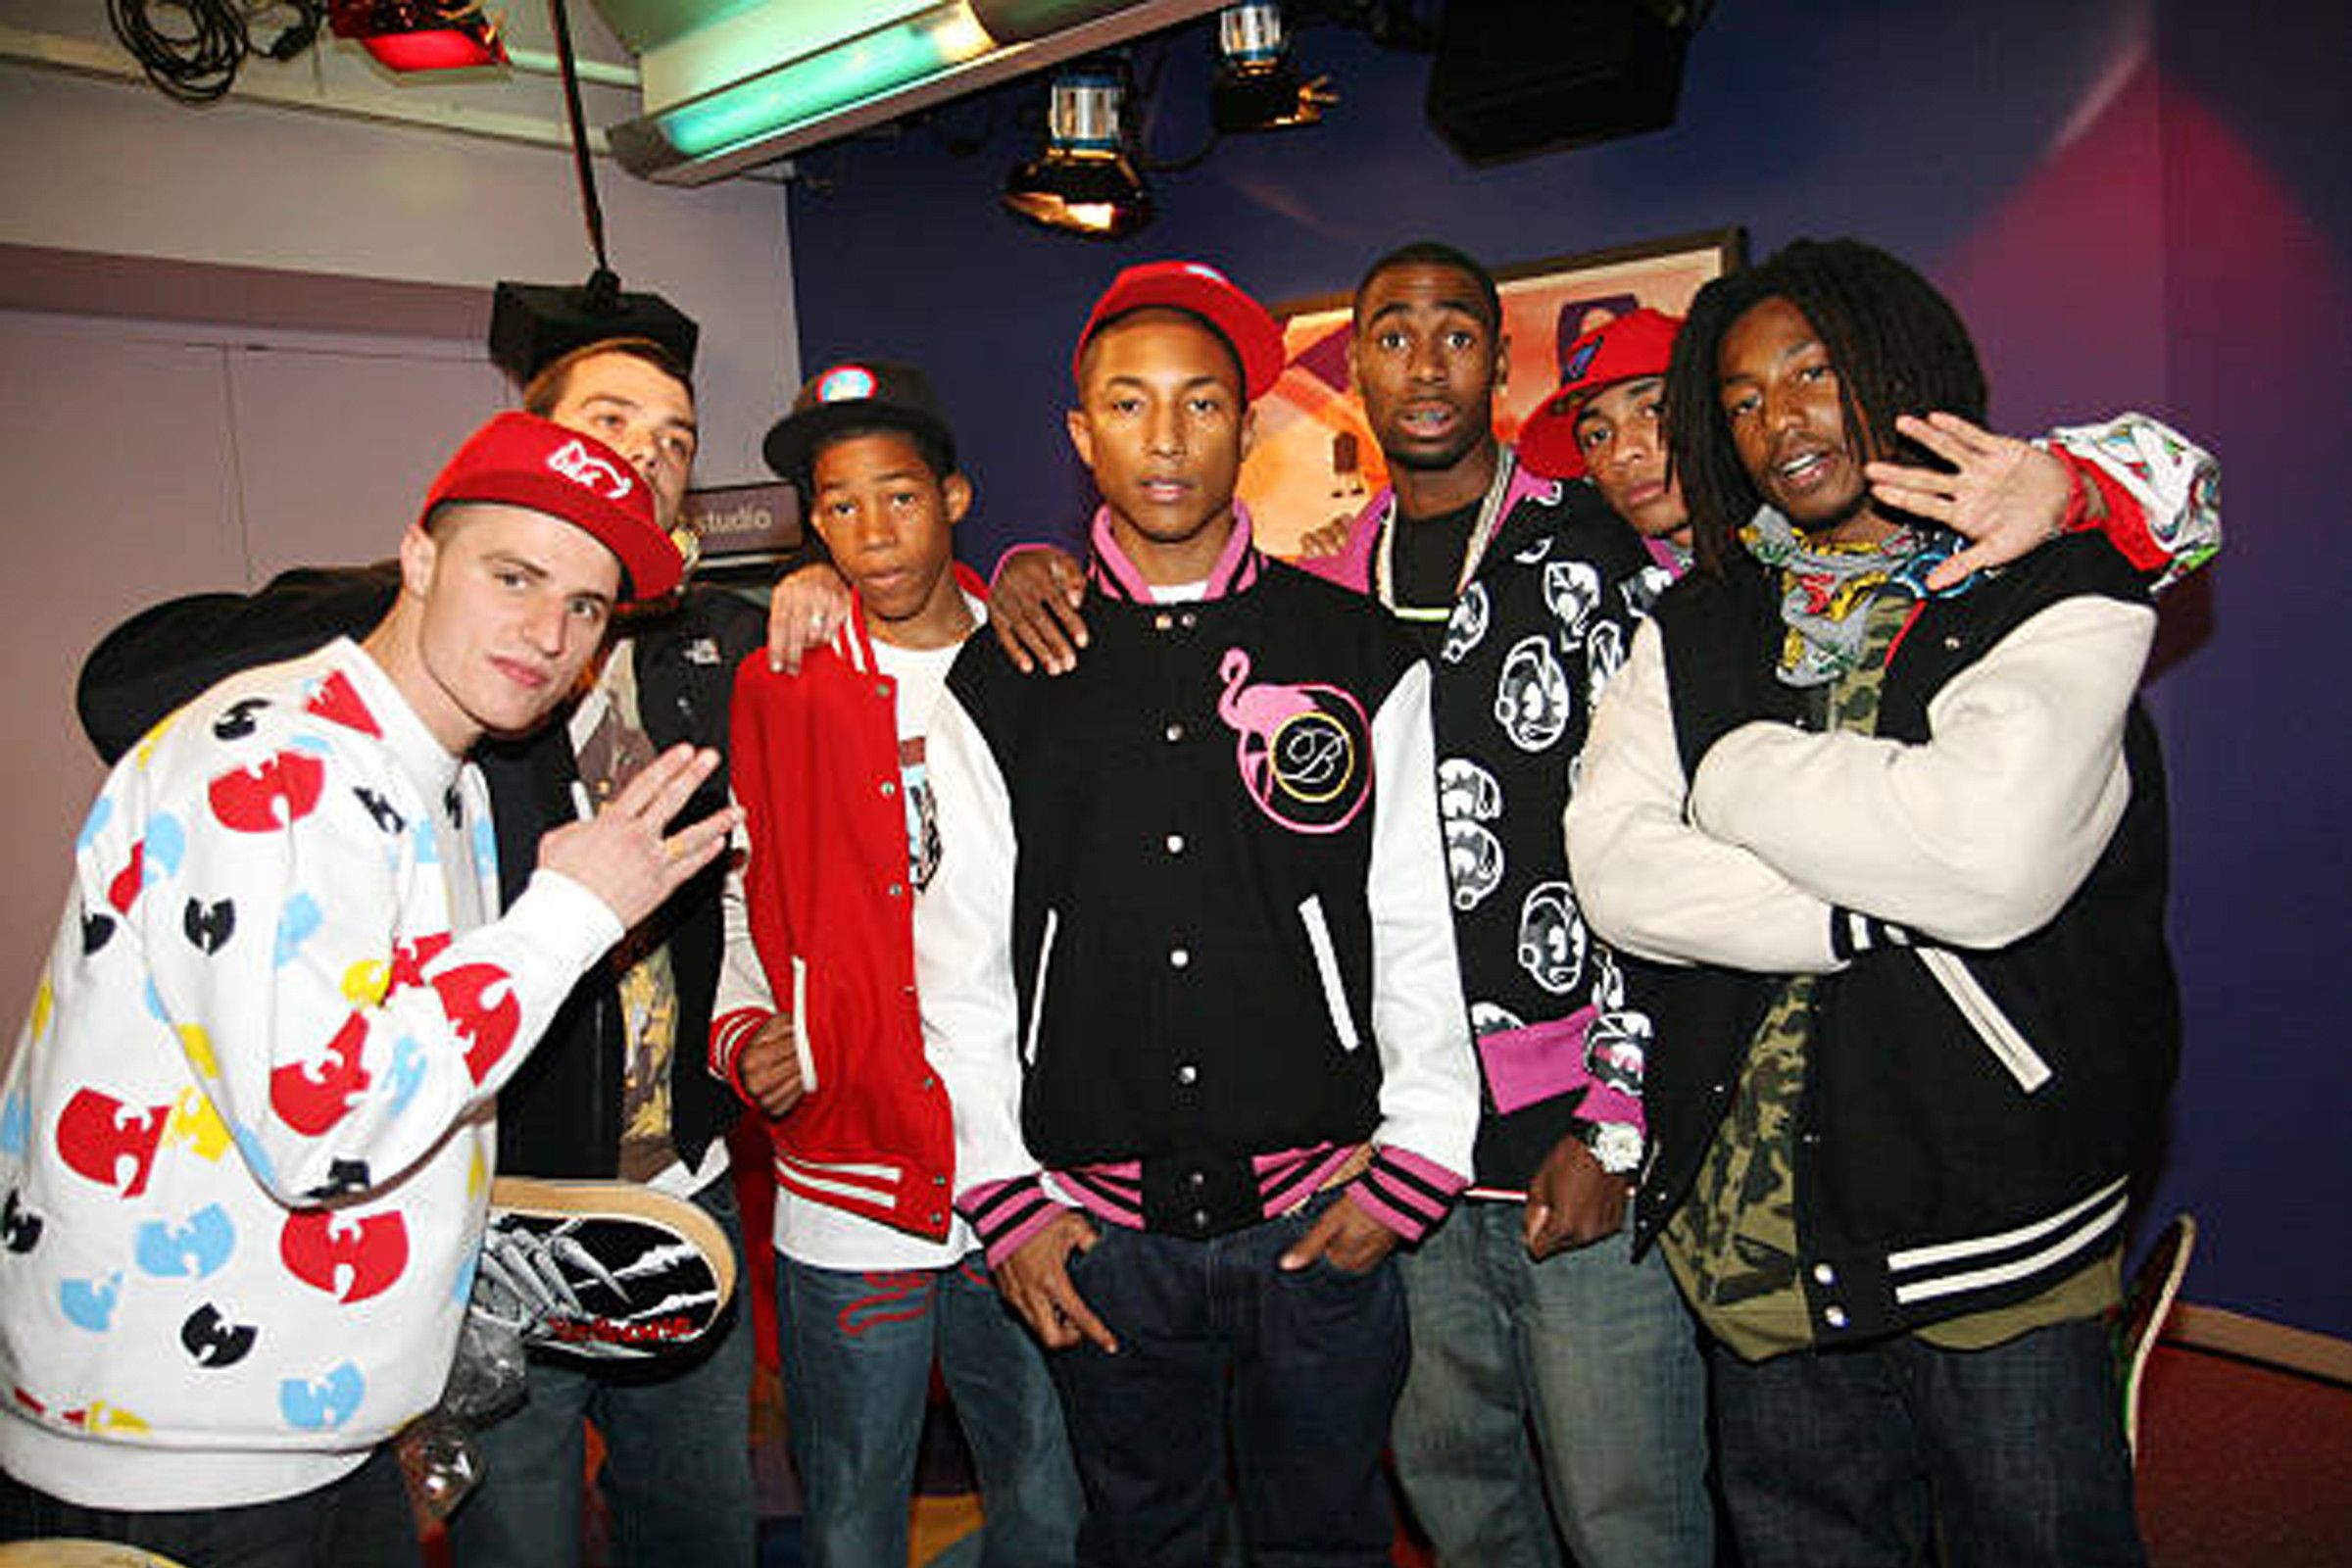 Pharrell with the Ice Cream Skate Team backstage at MTV's "Sucker Free" on November 21, 2006